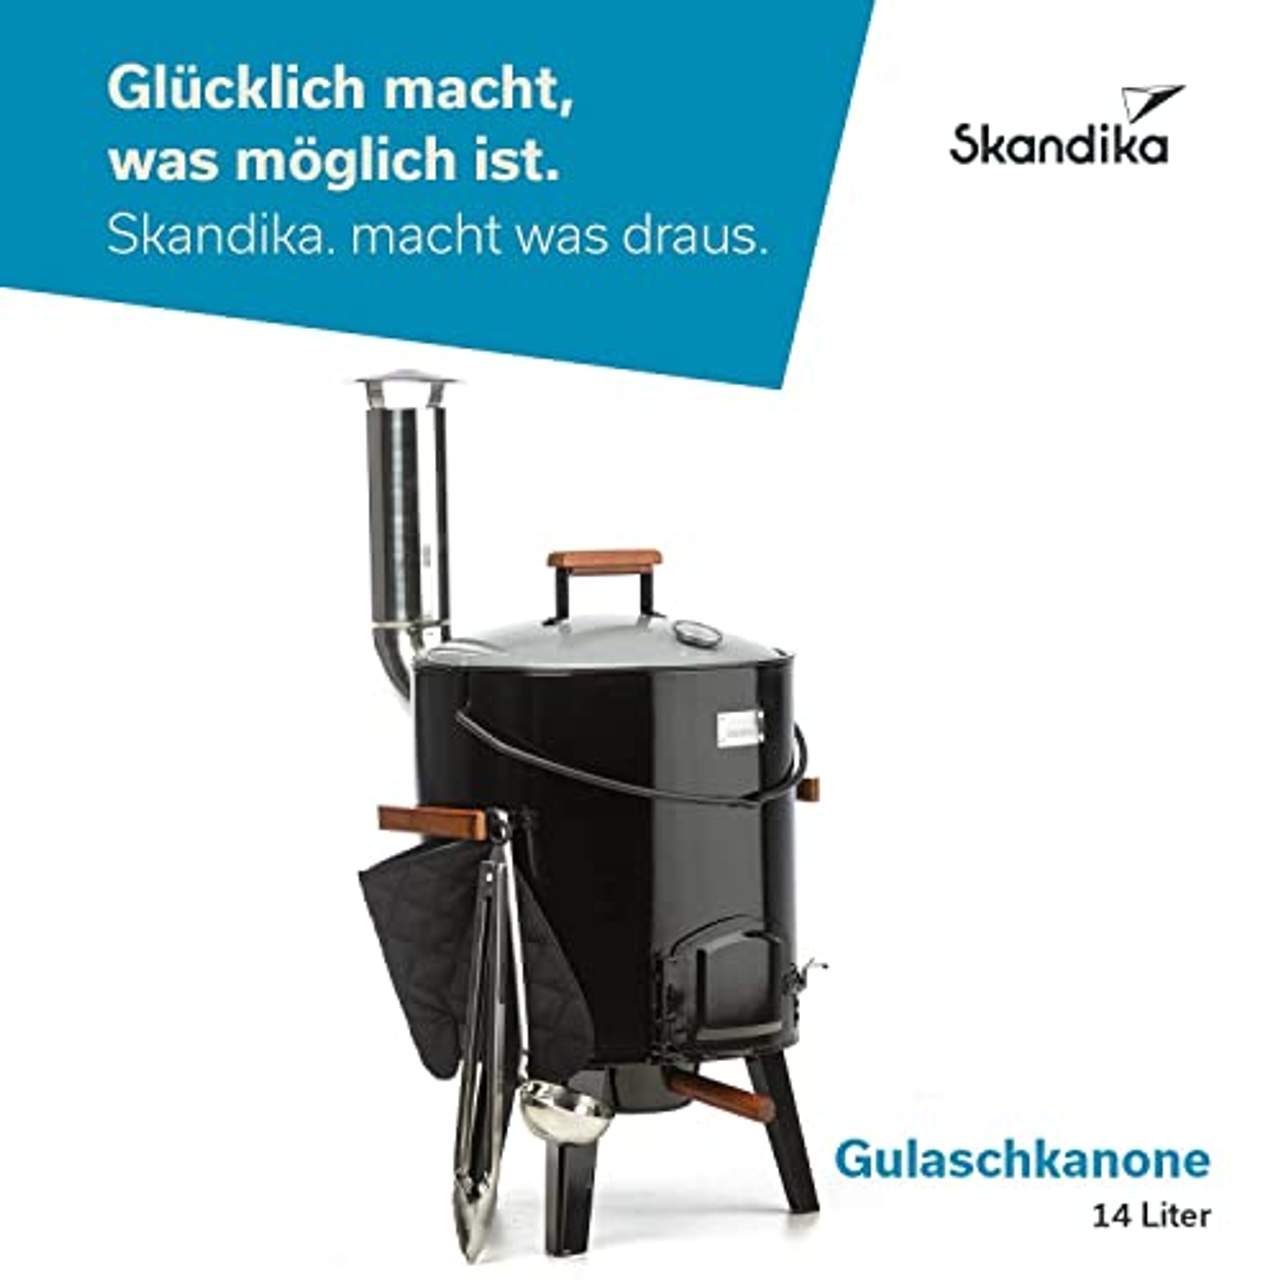 Skandika Gulaschkanone 14 Liter Gulaschkessel